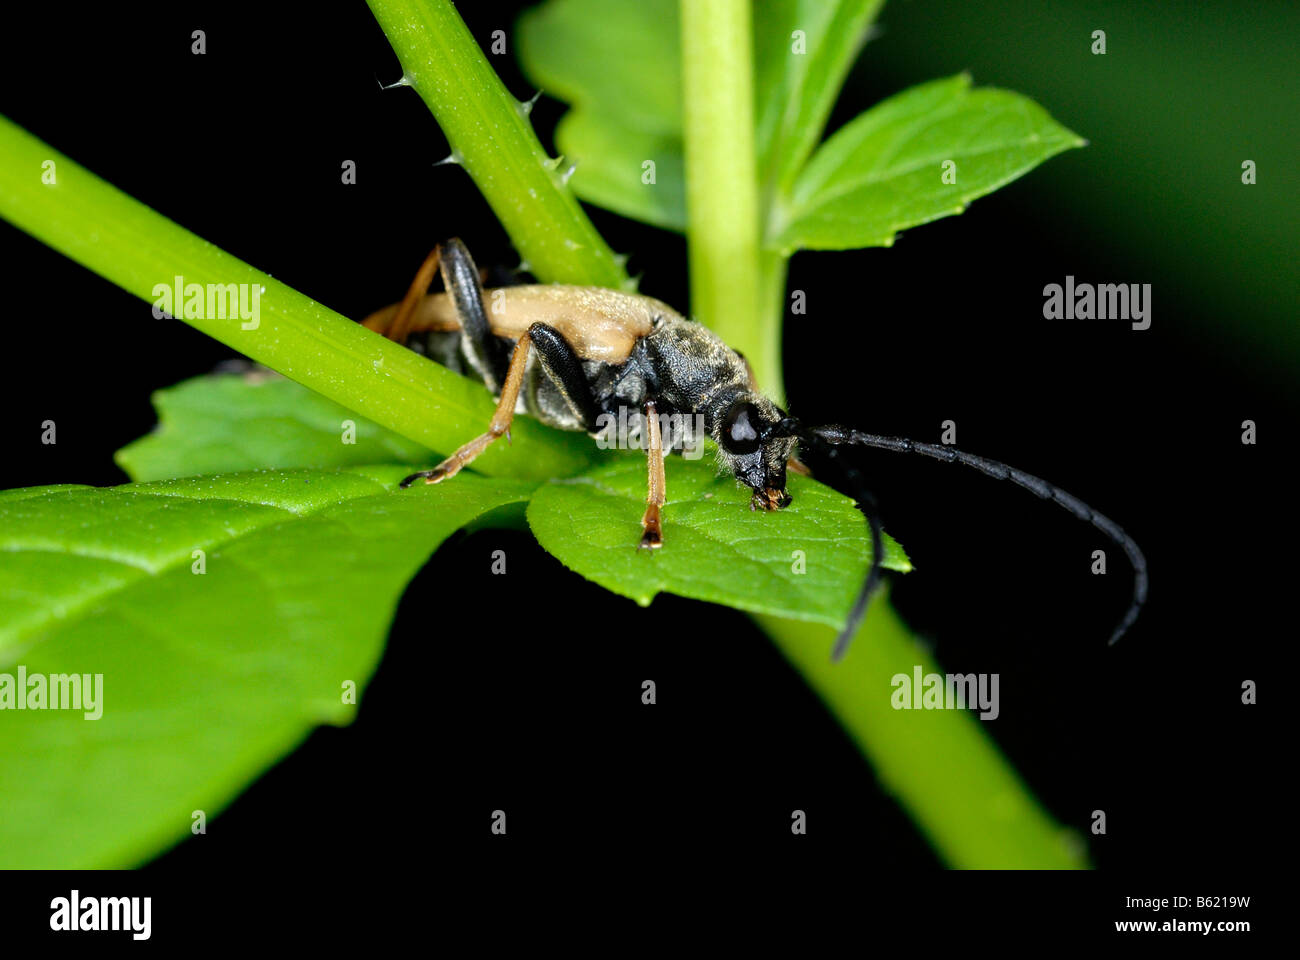 Longhorn Beetle (Cerambycidae) on a pedicle Stock Photo